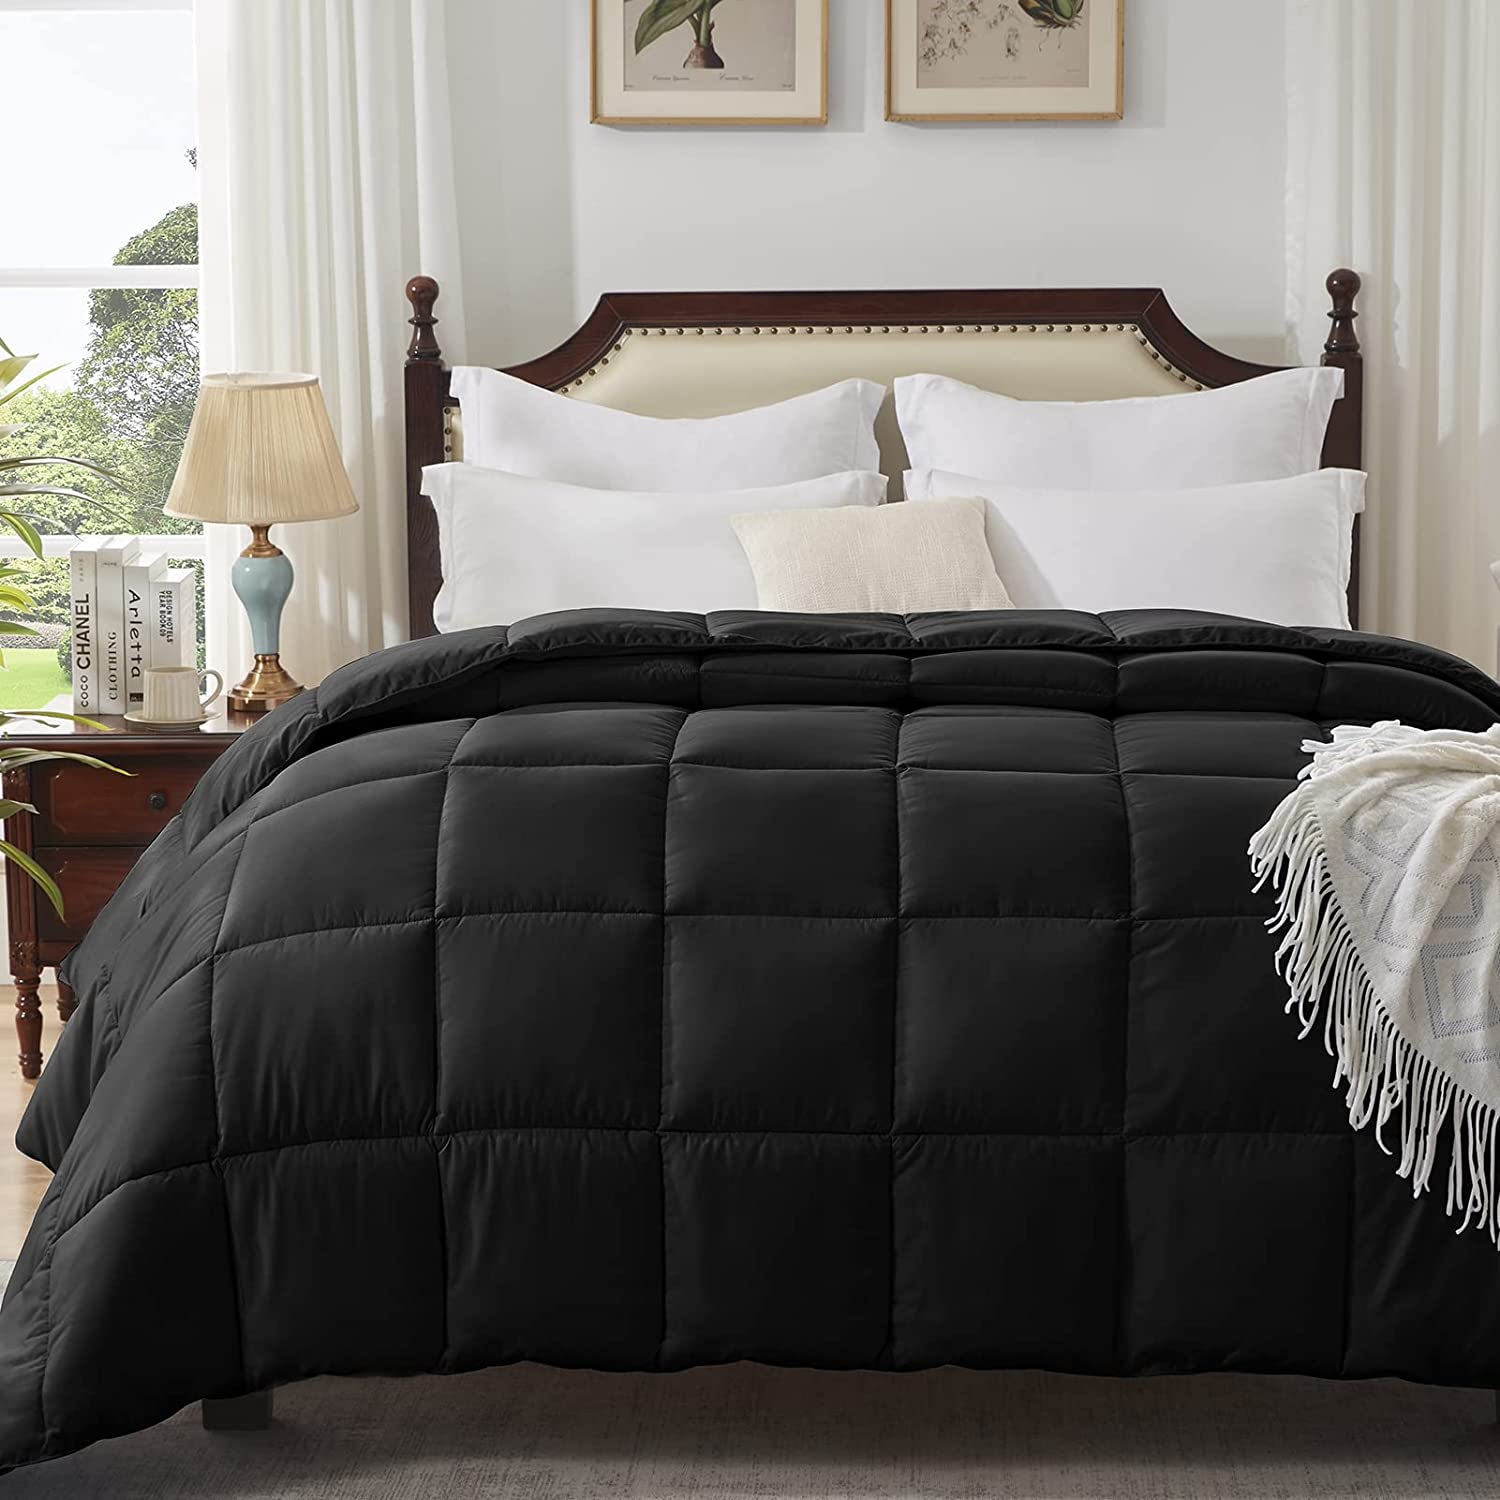 King Comforter Black Lightweight Comforter Duvet Insert down Alternative Bed Comforter All Season Quilted Comforters King Size Black